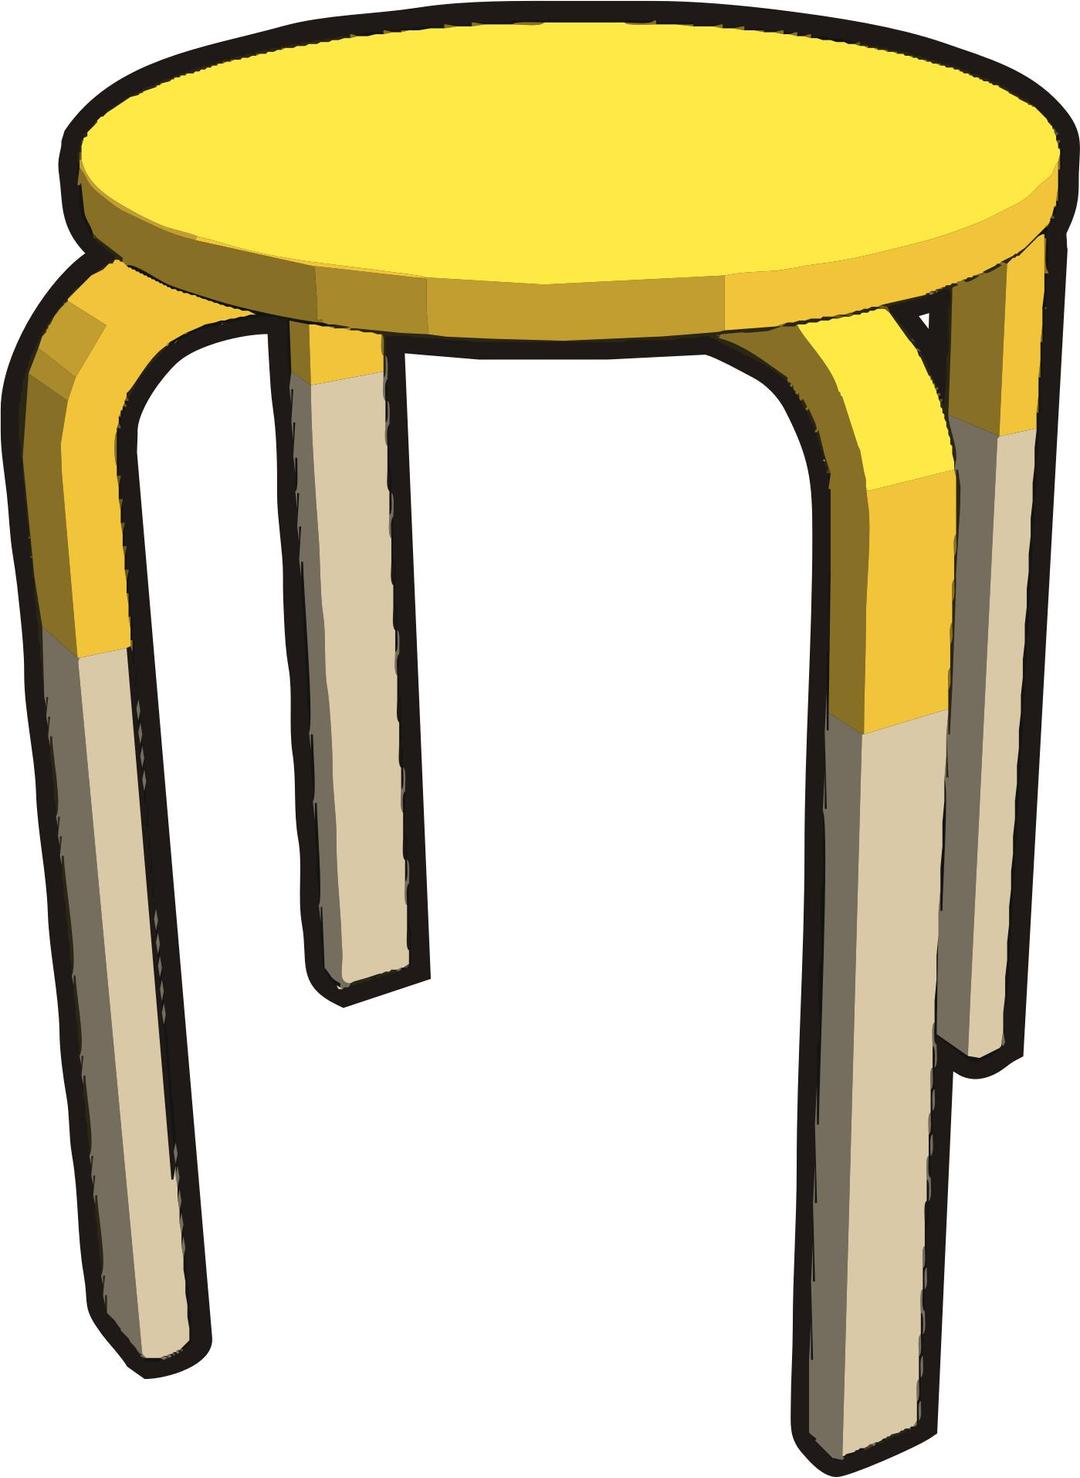 Ikea stuff - Frosta stool, half yellow png transparent